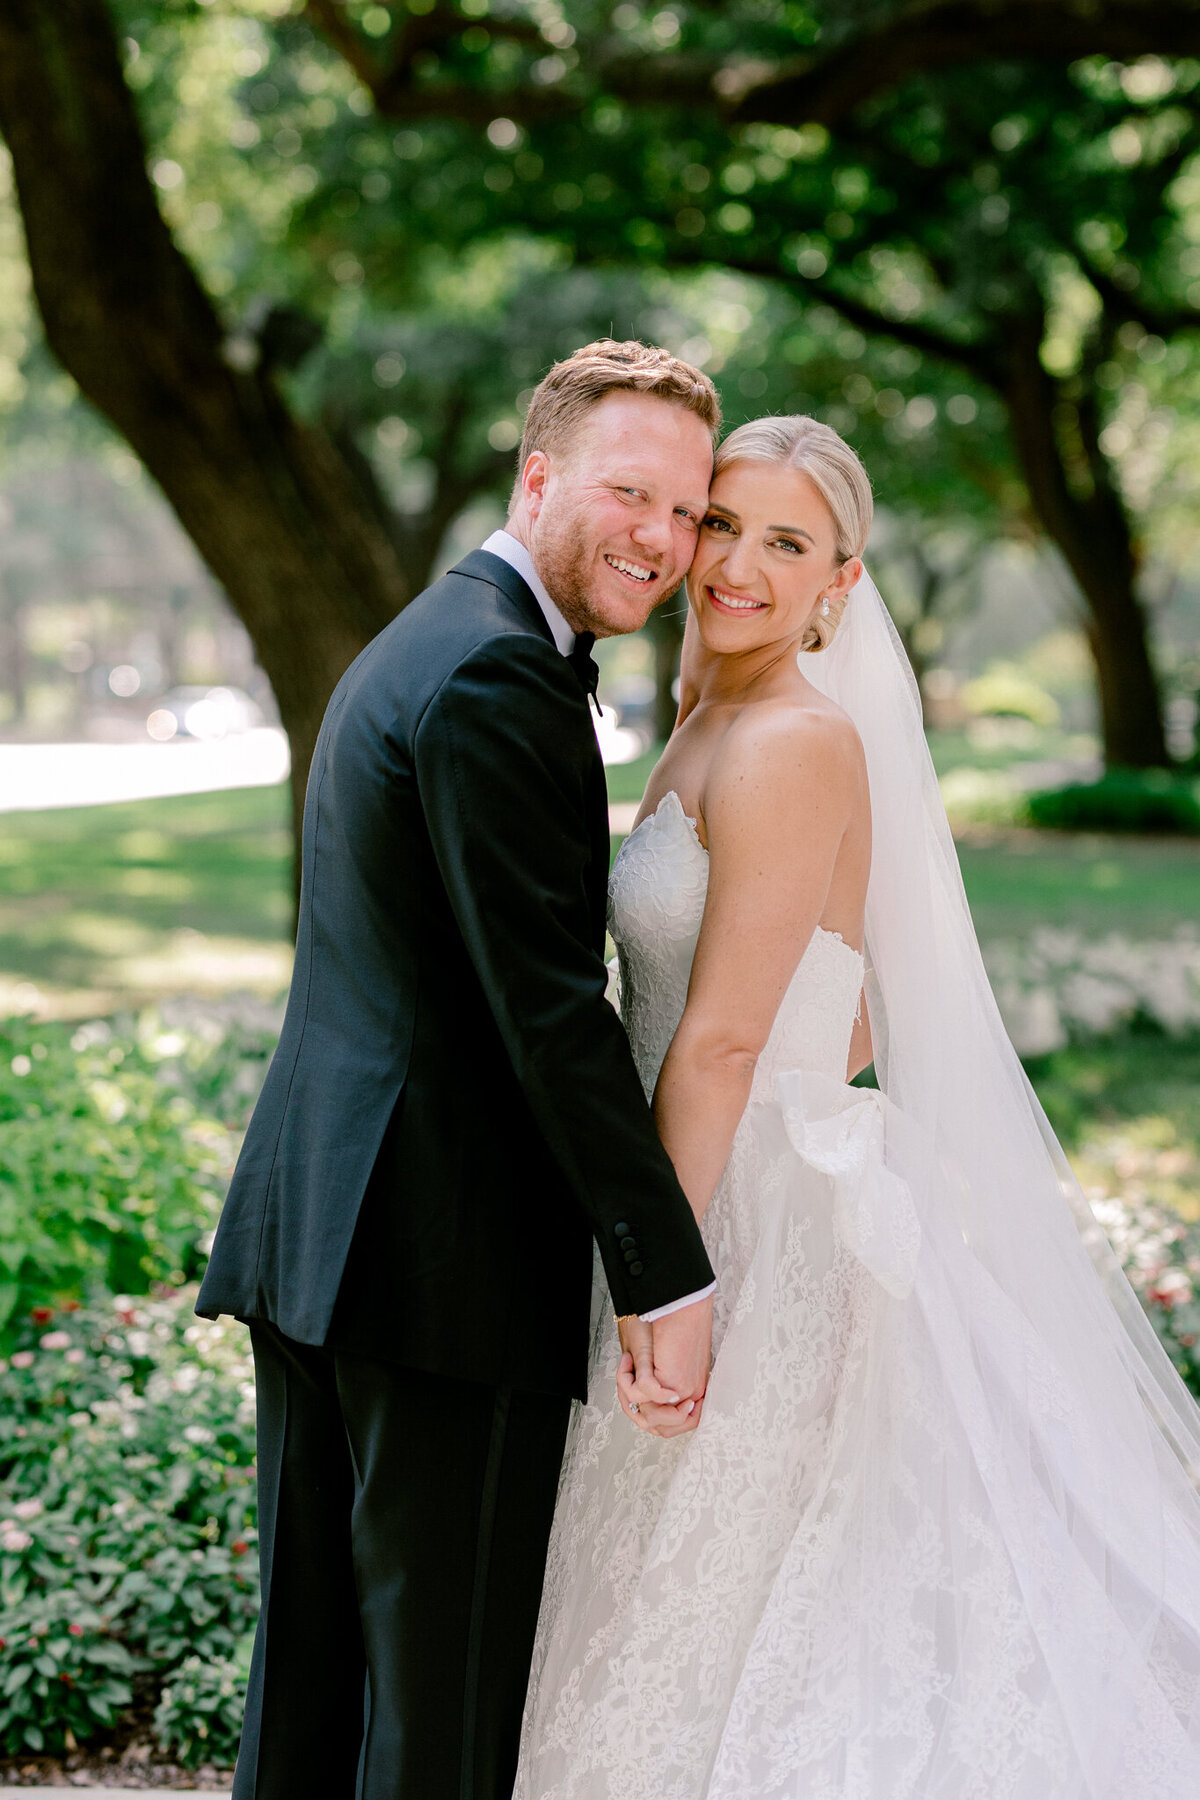 Katelyn & Kyle's Wedding at the Adolphus Hotel | Dallas Wedding Photographer | Sami Kathryn Photography-200